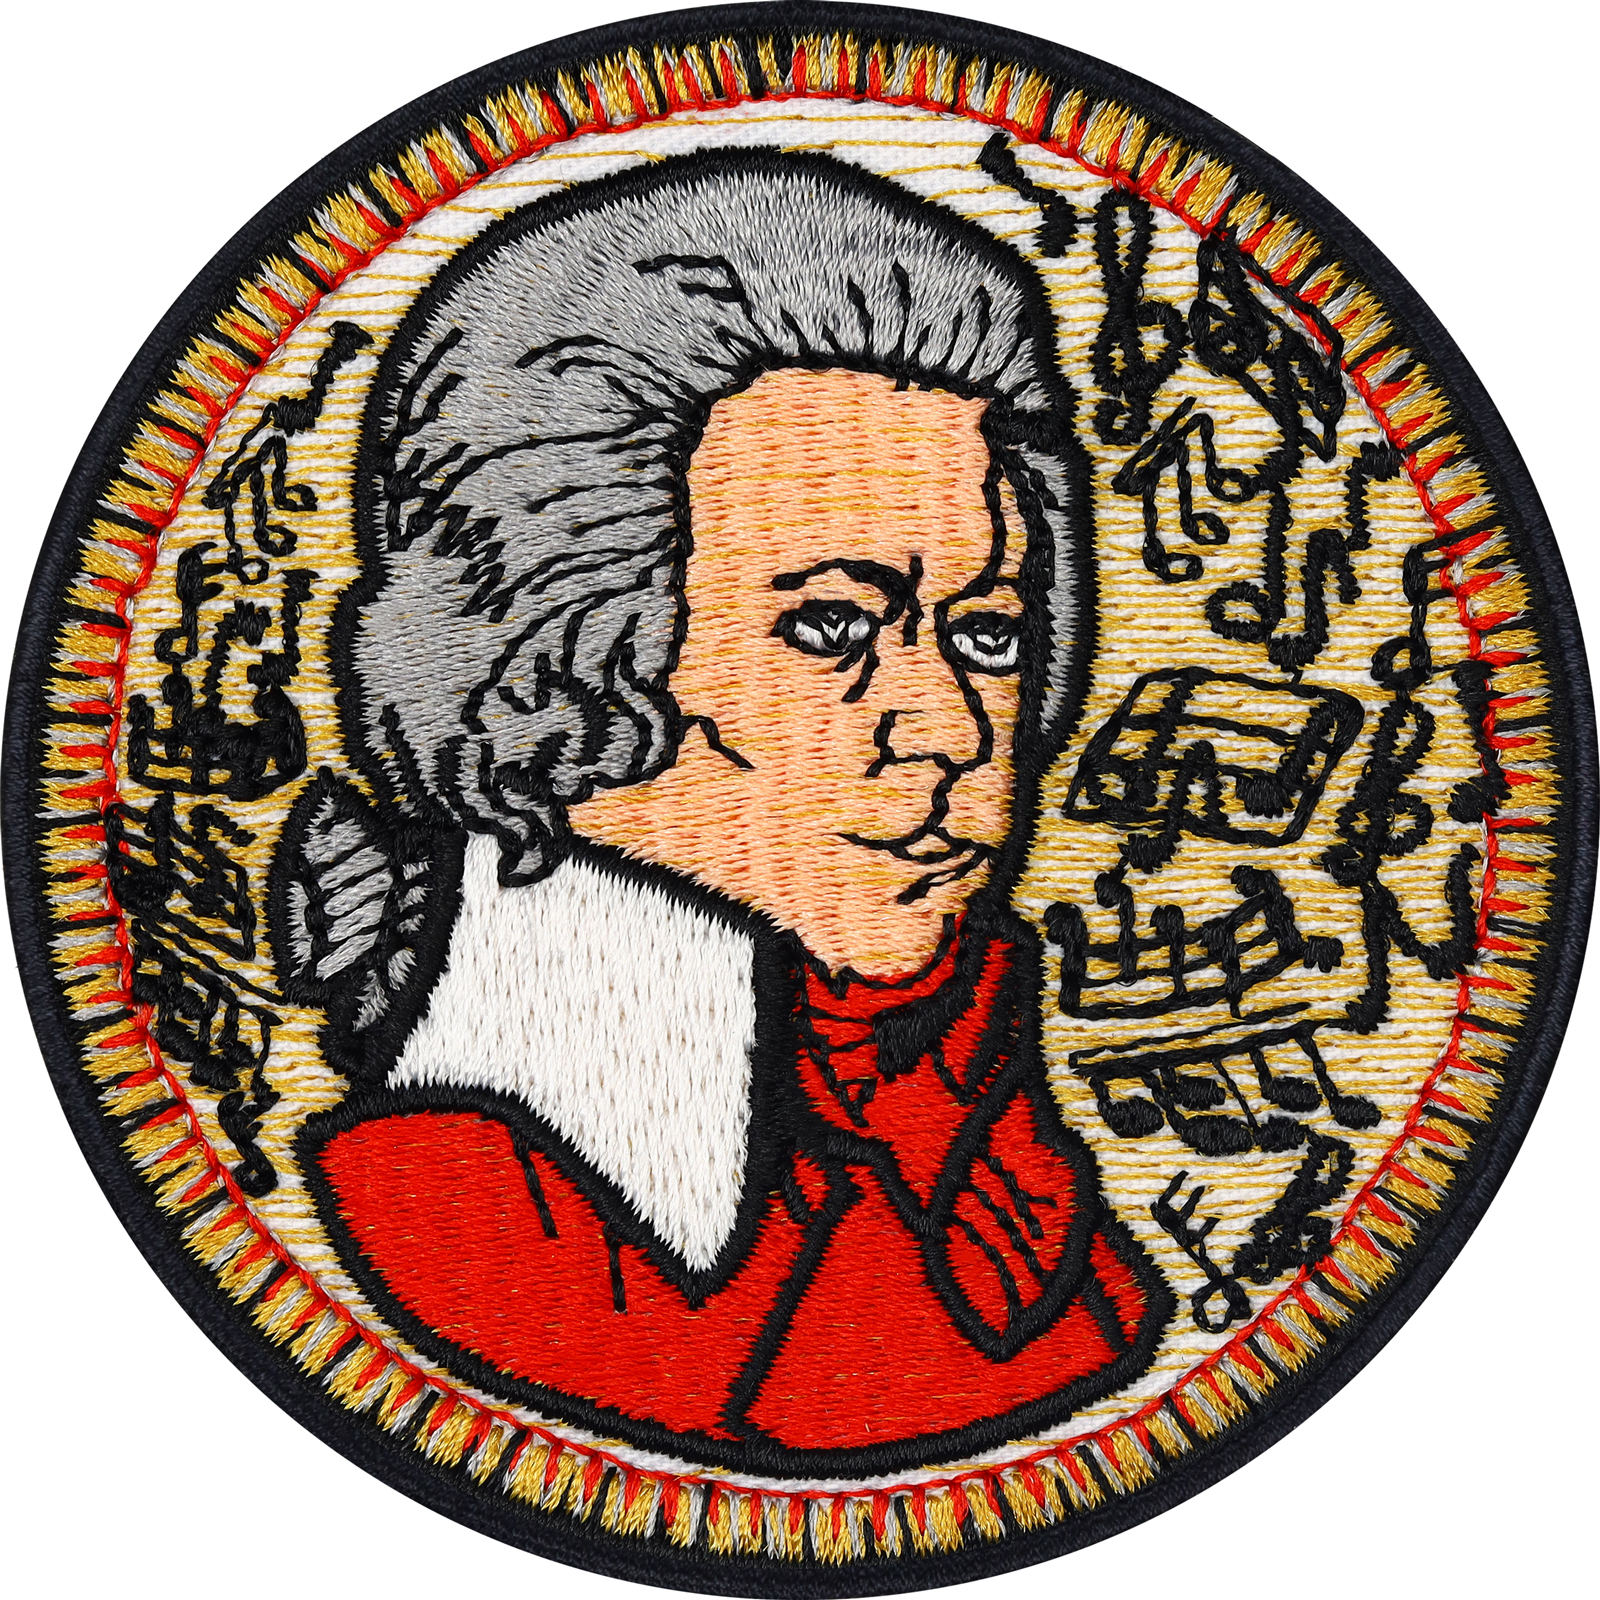 Mozart - Patch